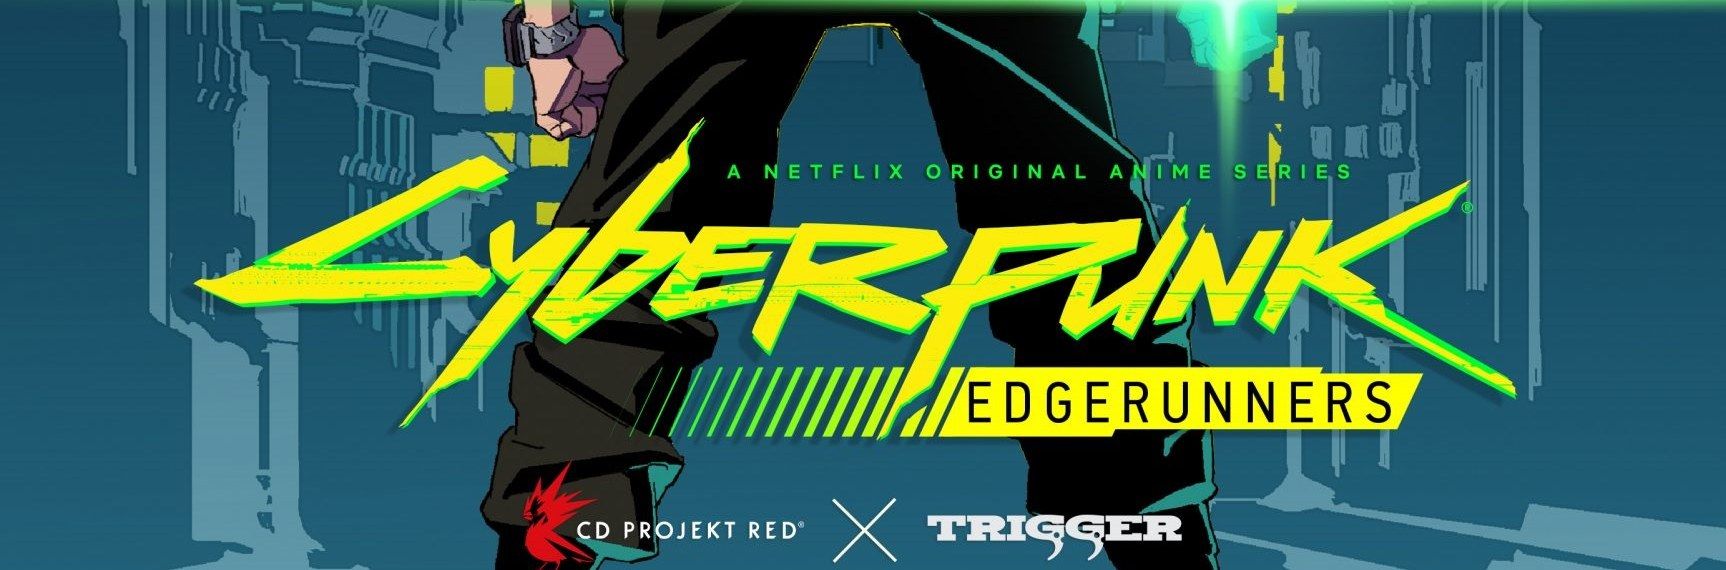 Cyberpunk: Edgerunners': 'Cyberpunk 2077' Is Getting an Anime